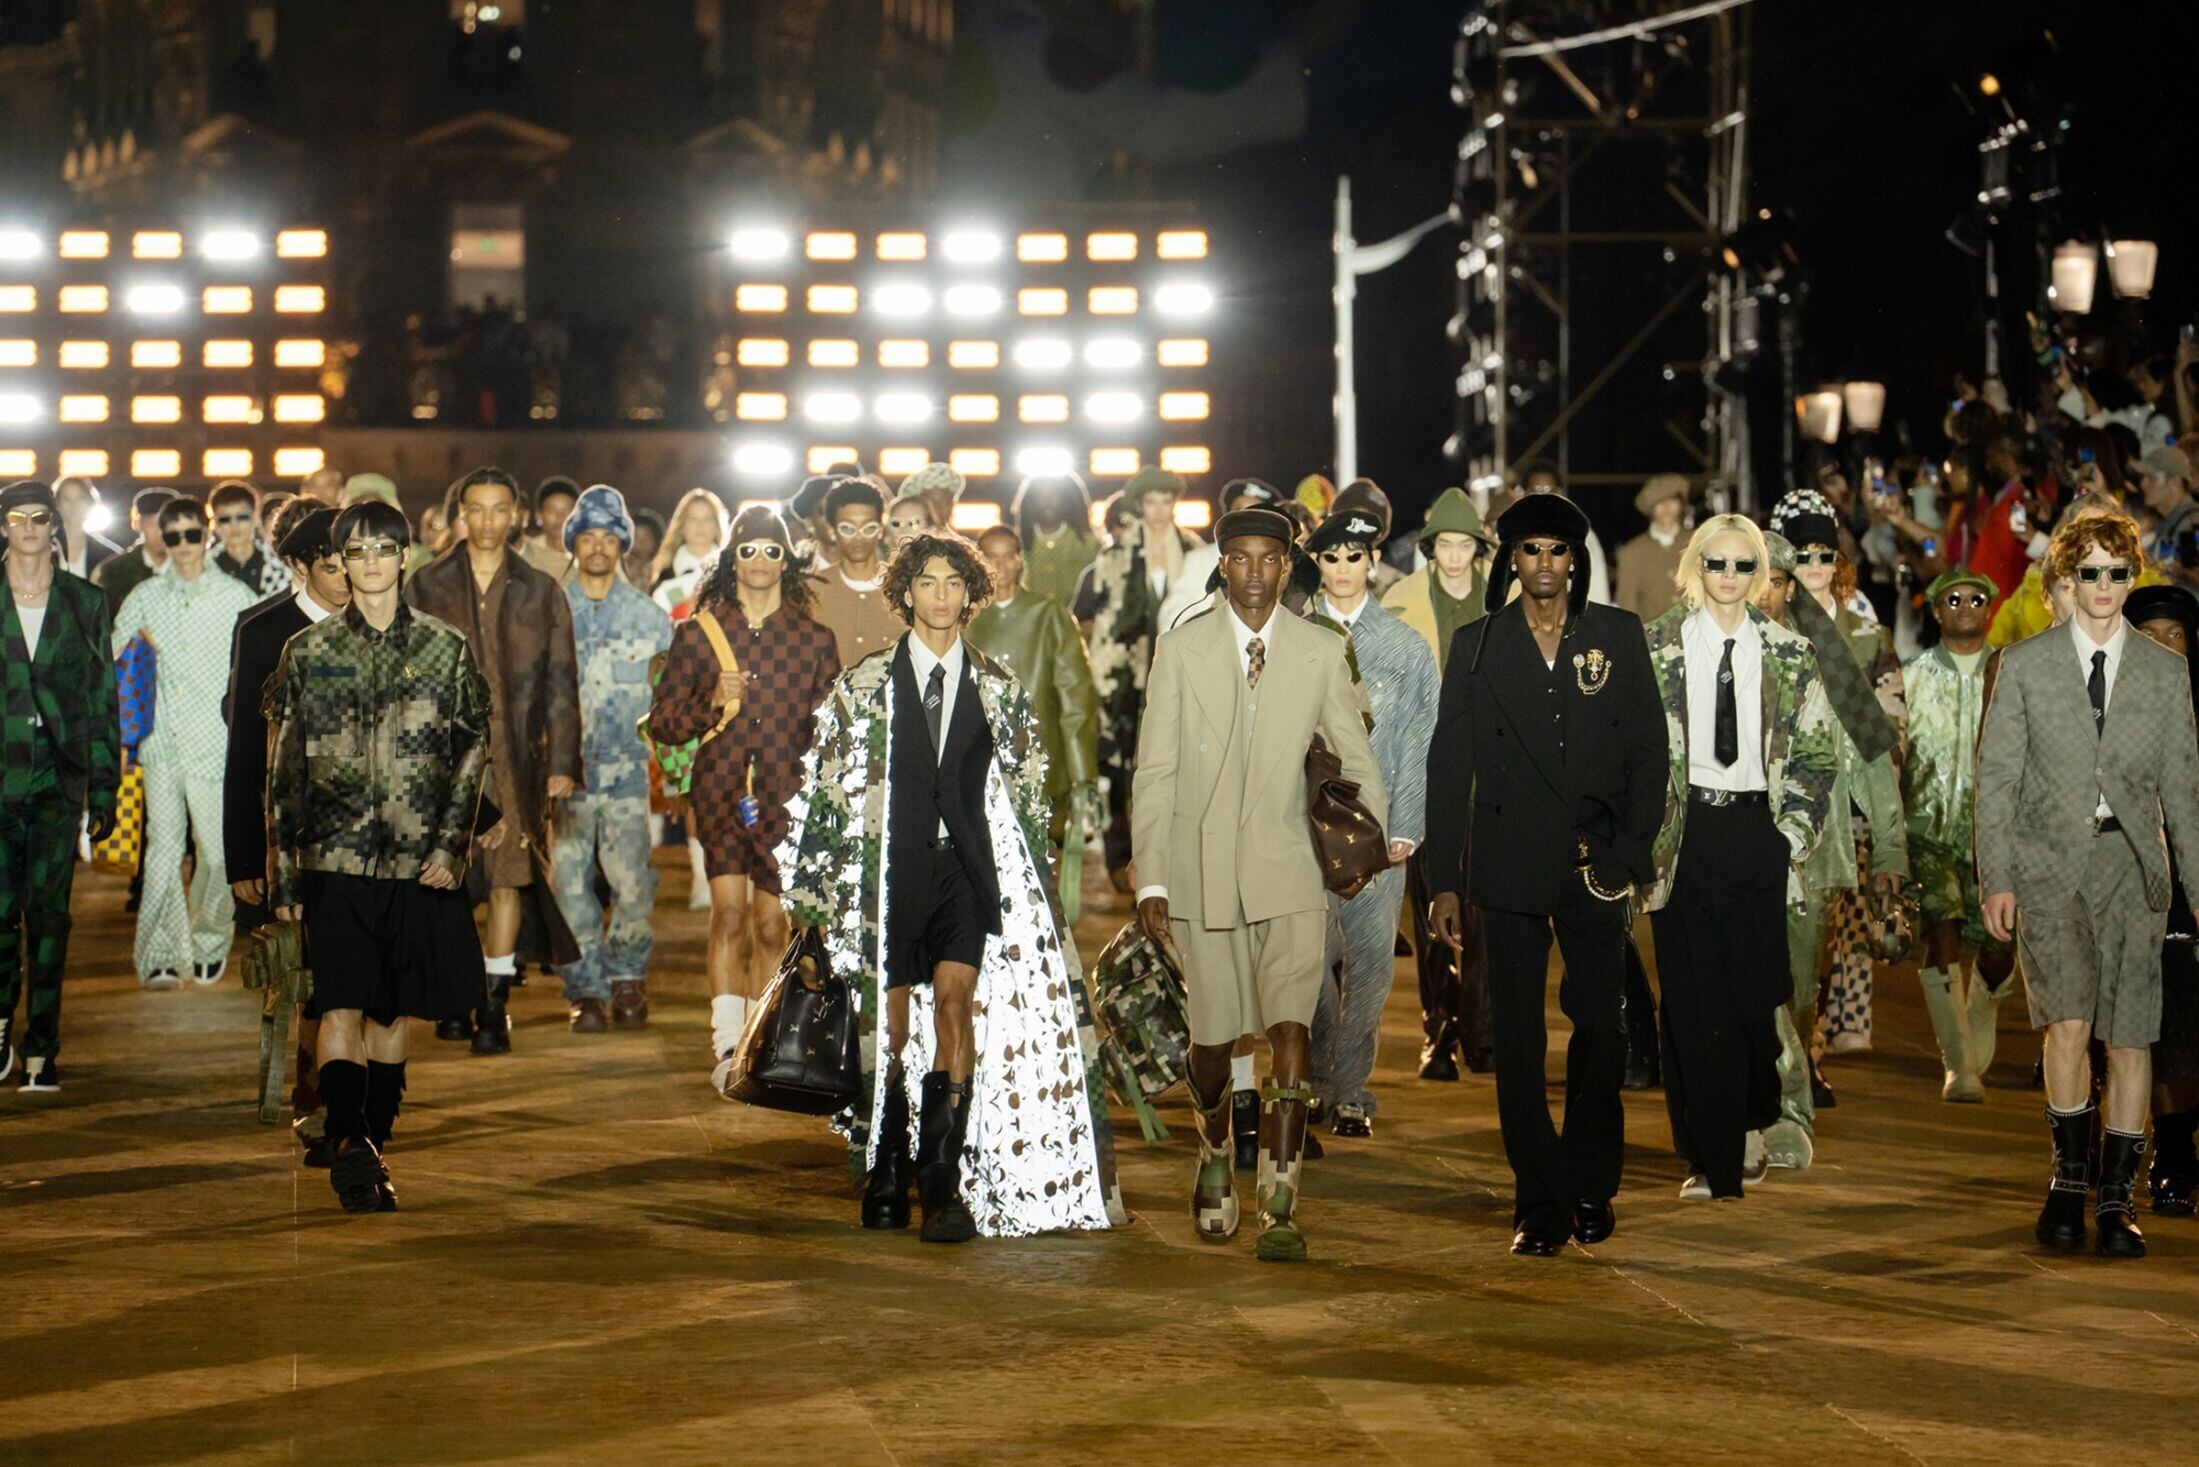 París acoge el primer desfile de Pharrell Williams para Louis Vuitton